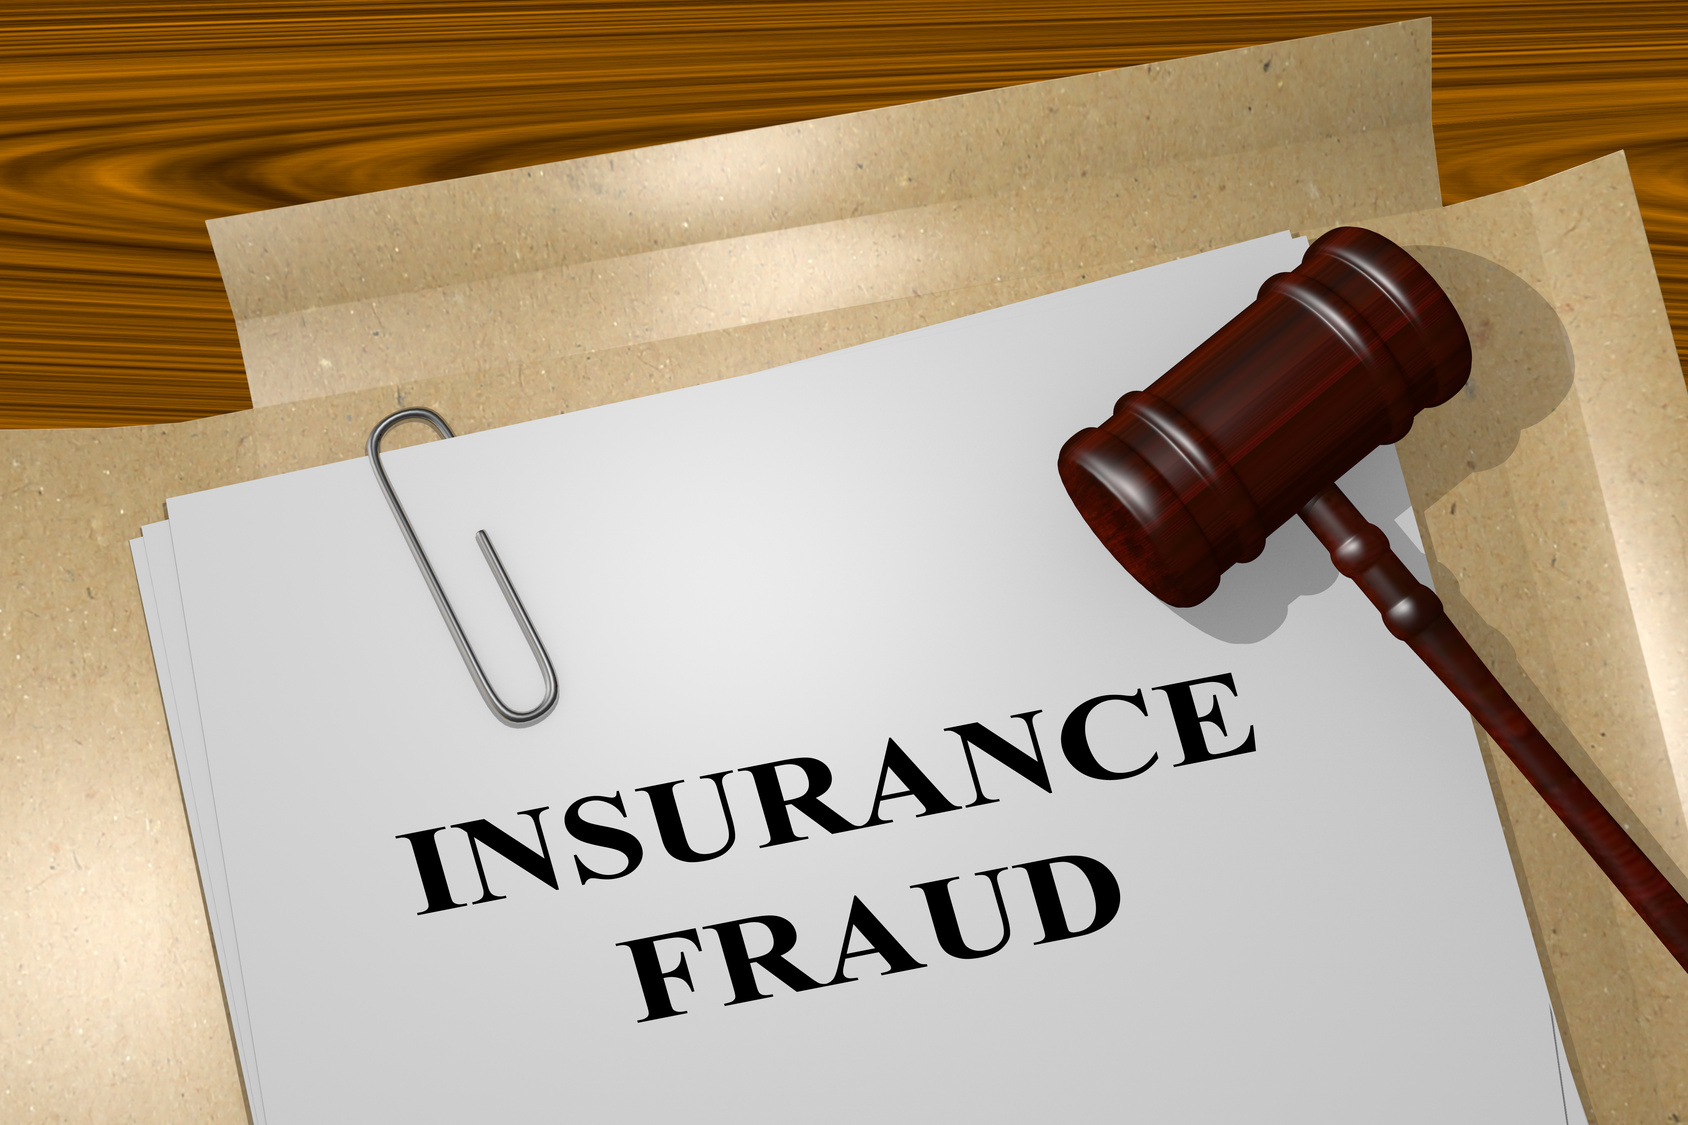 Fraud insurance investigator job opening